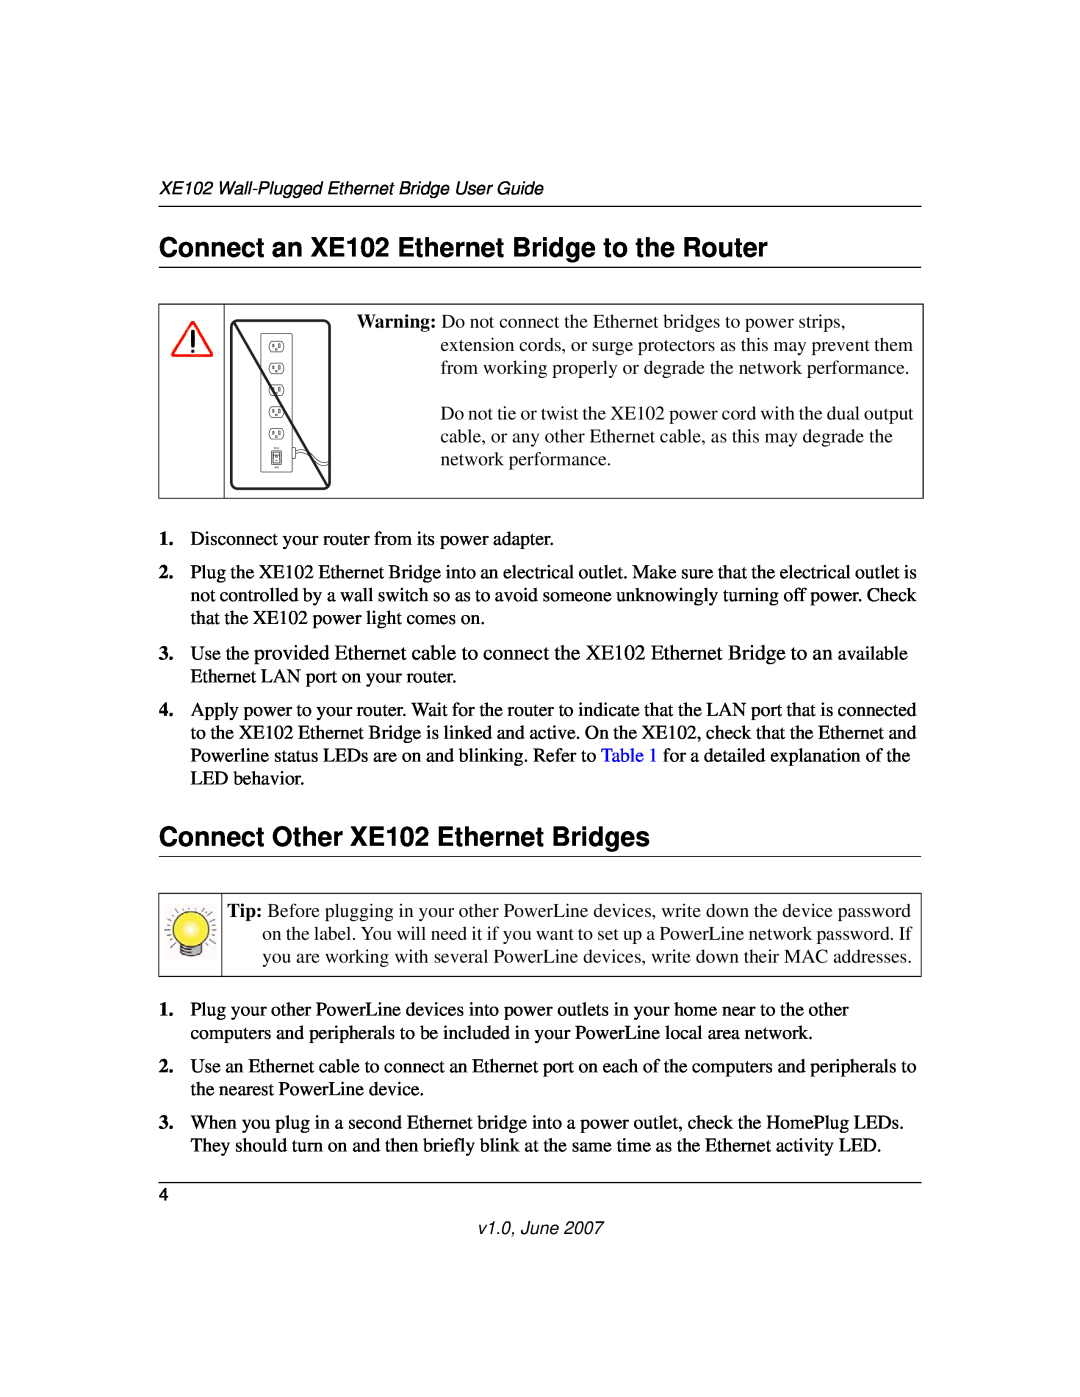 NETGEAR manual Connect an XE102 Ethernet Bridge to the Router, Connect Other XE102 Ethernet Bridges 